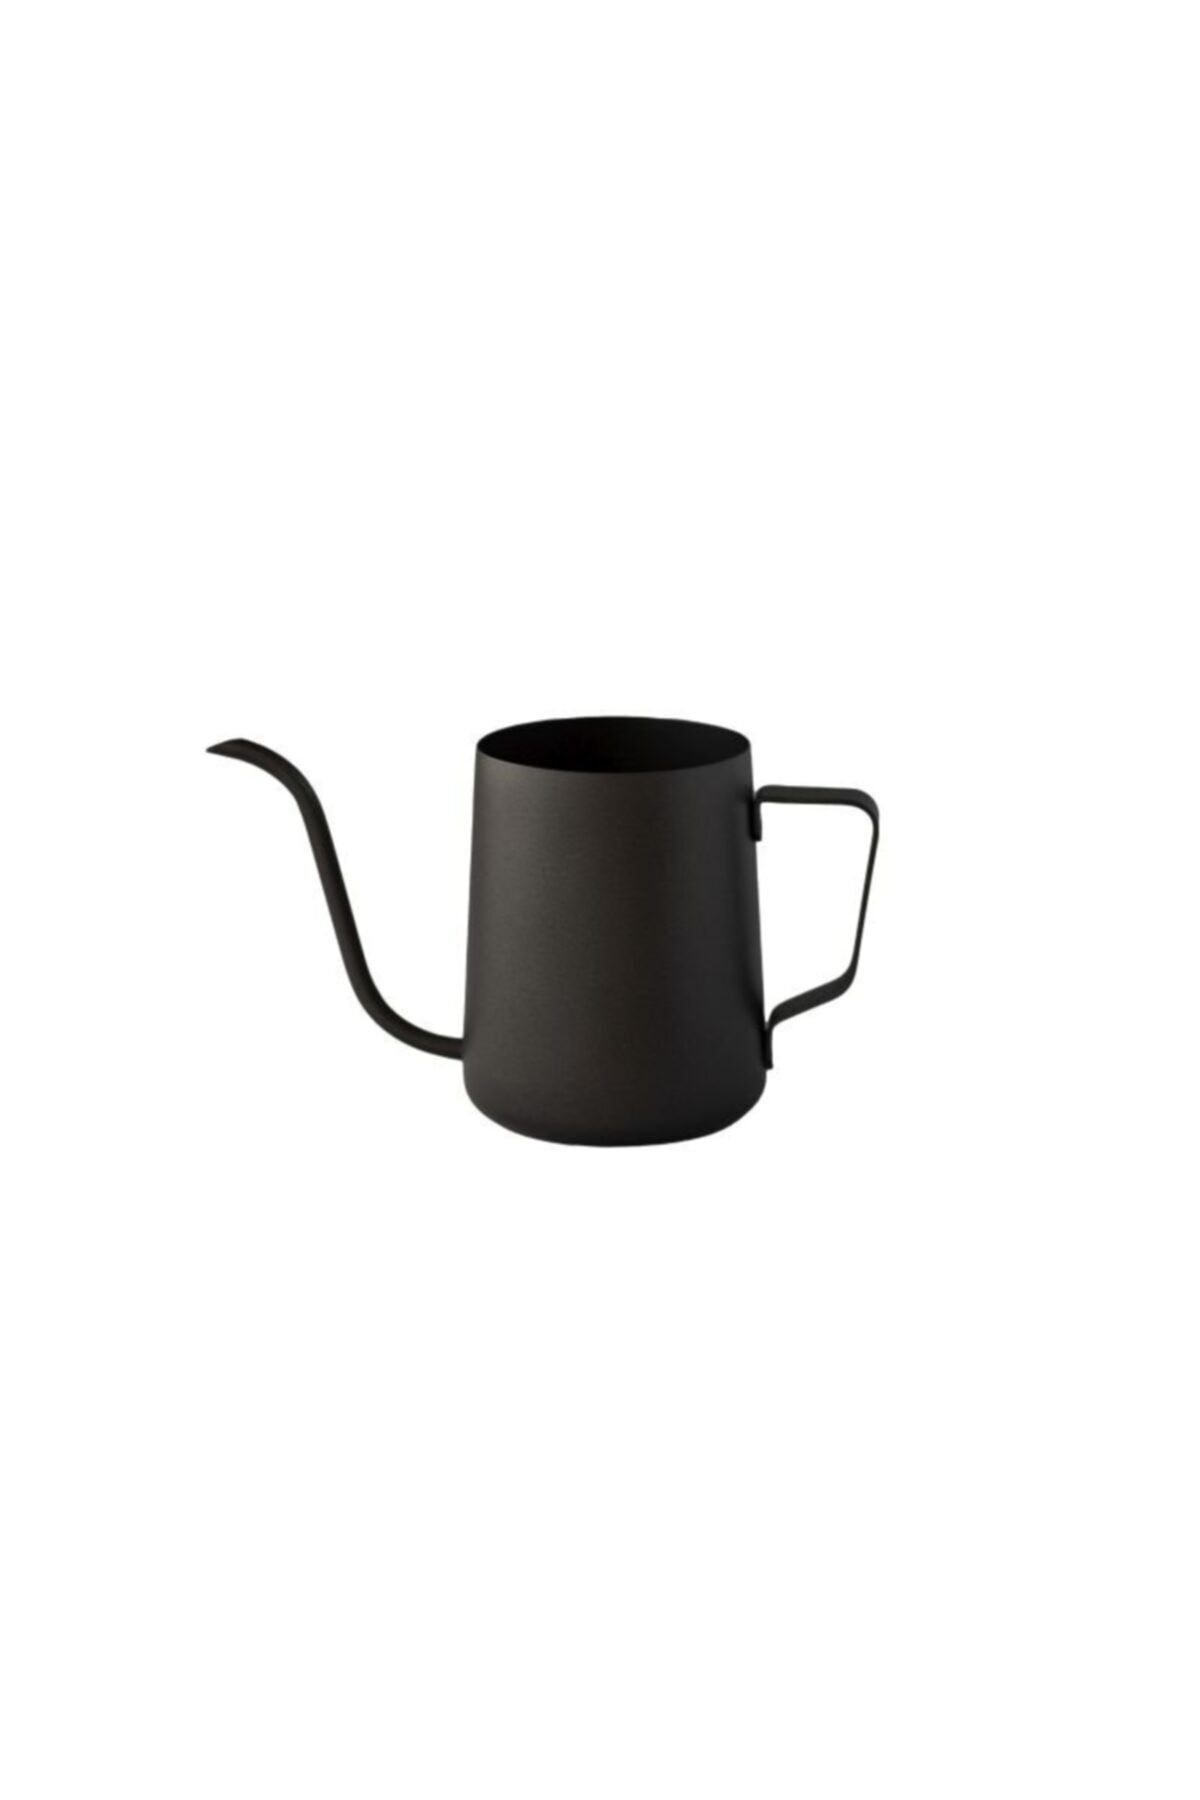 COLDBREWTREND Black Goat Mini Drip Kettle - 350 Ml - Kahve Demleme Ibriği